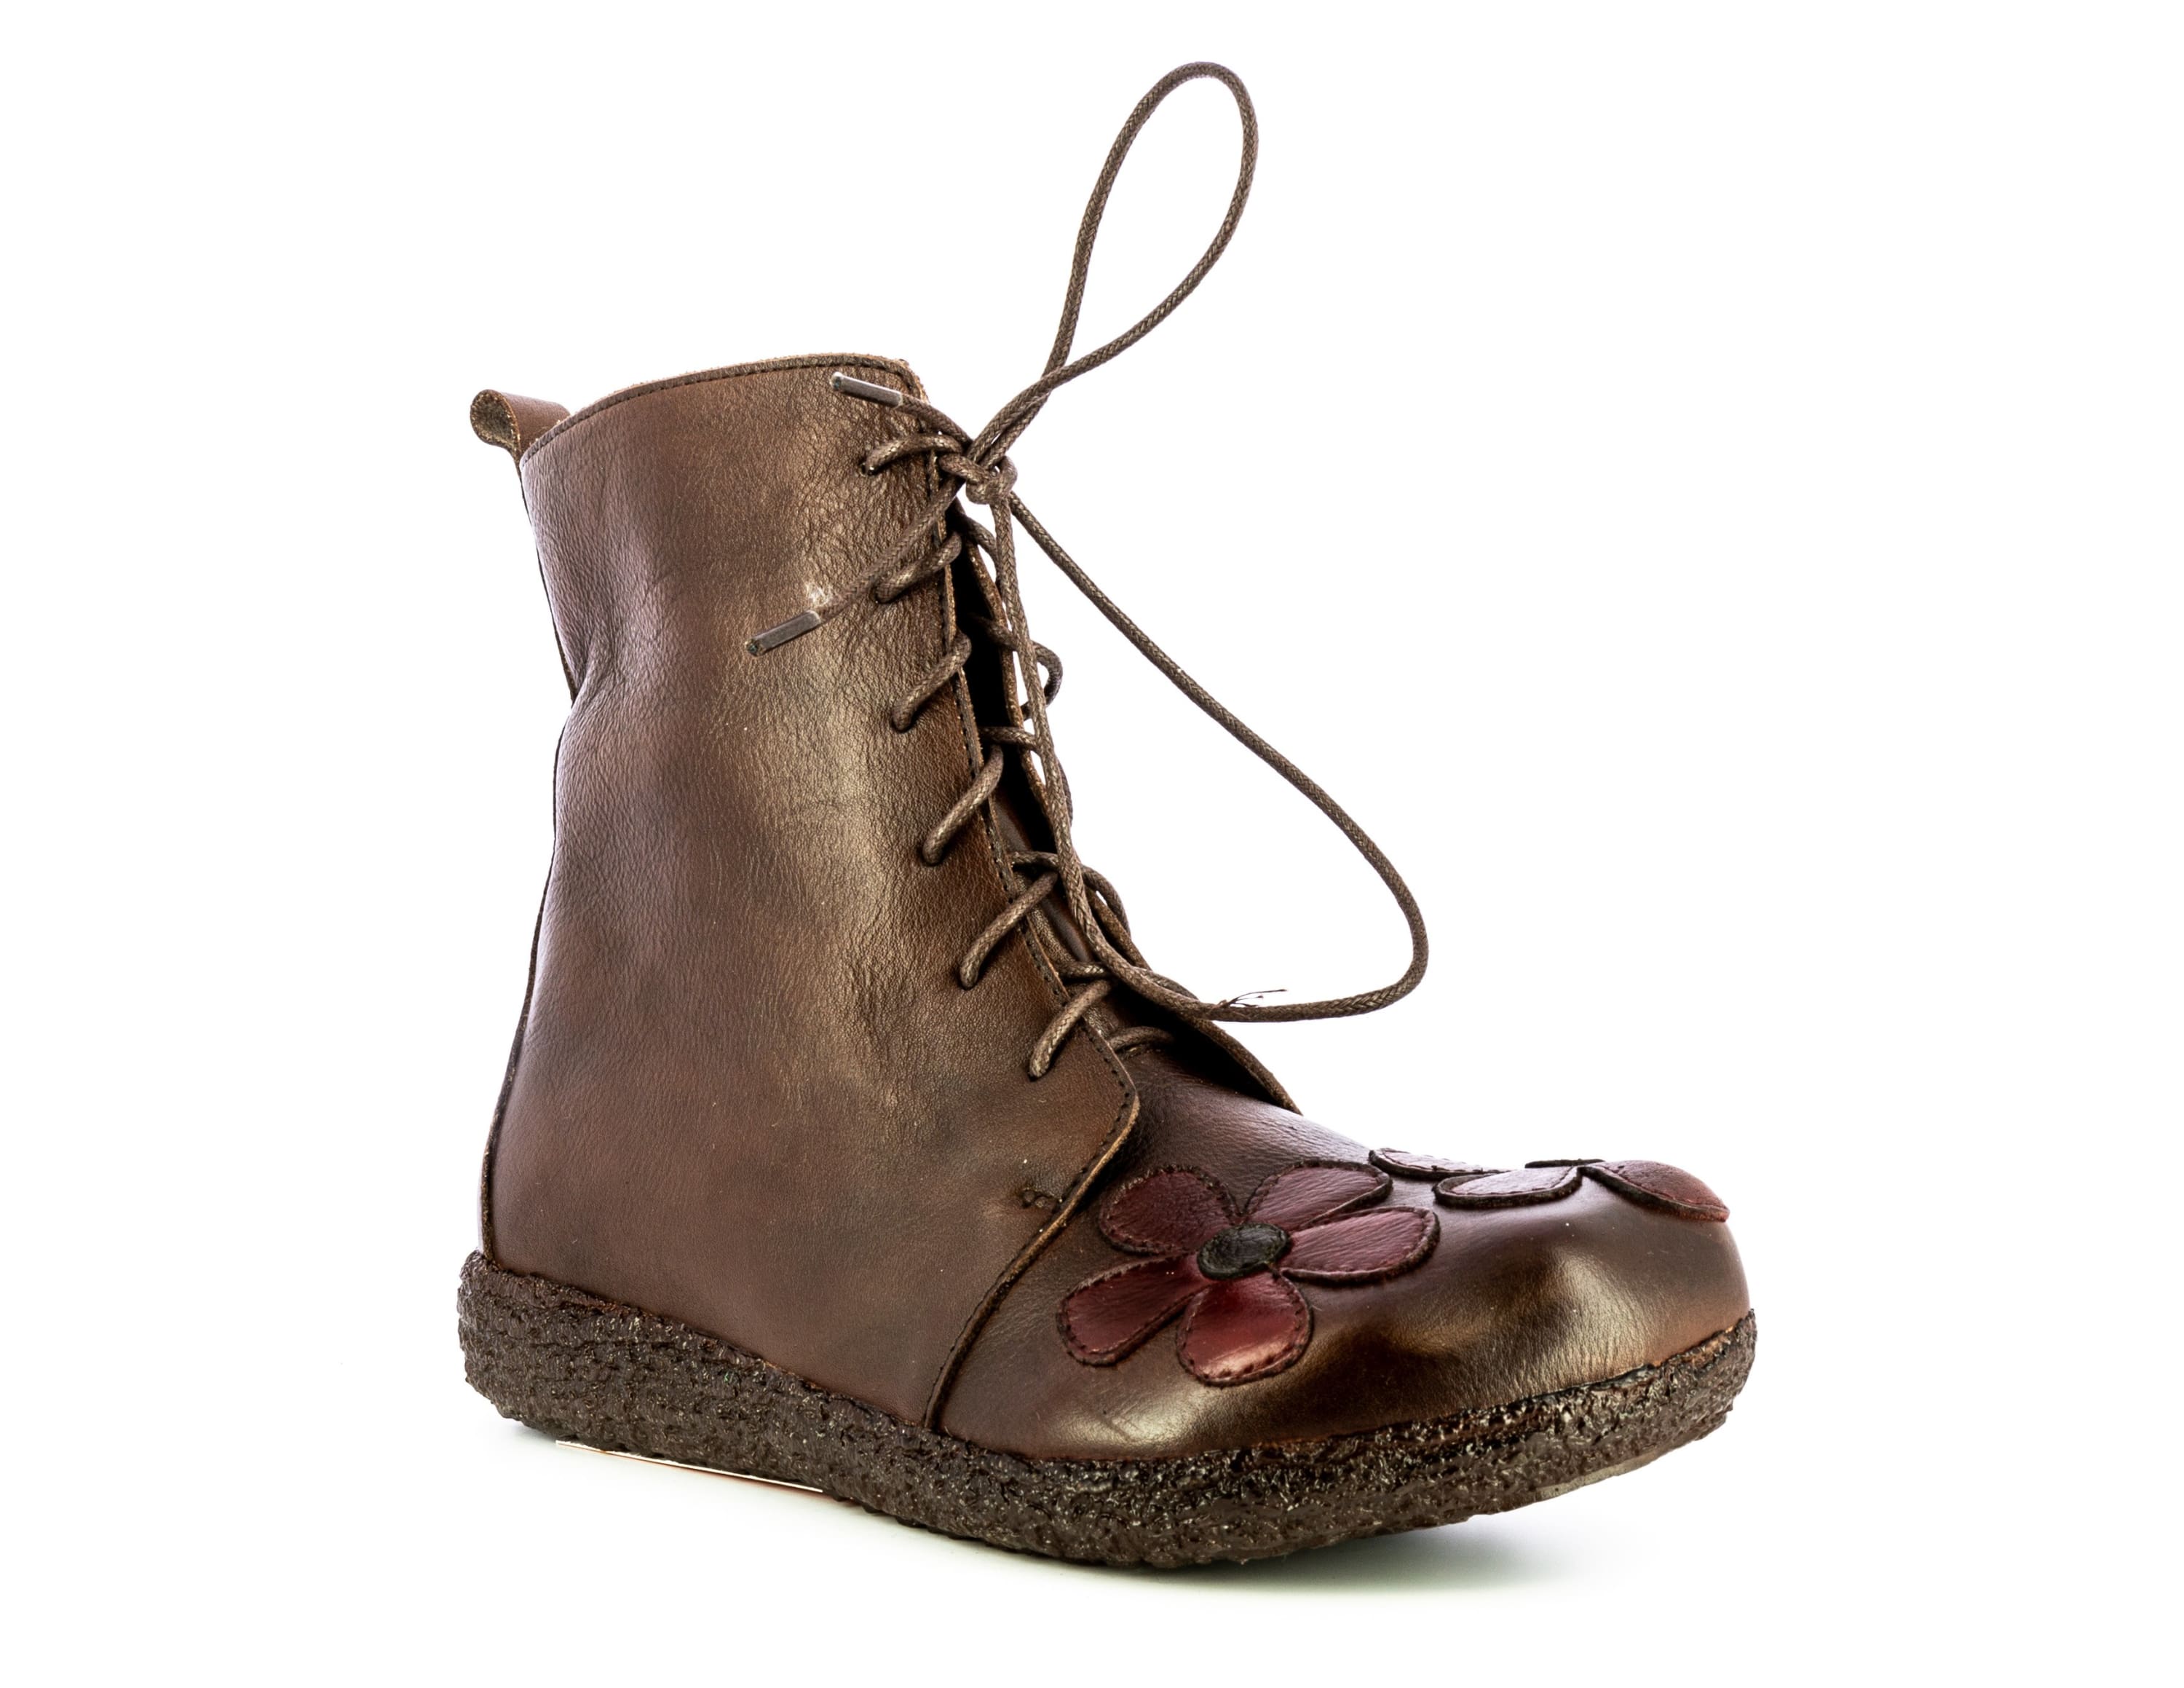 Shoe GOCNO 135 - Boots